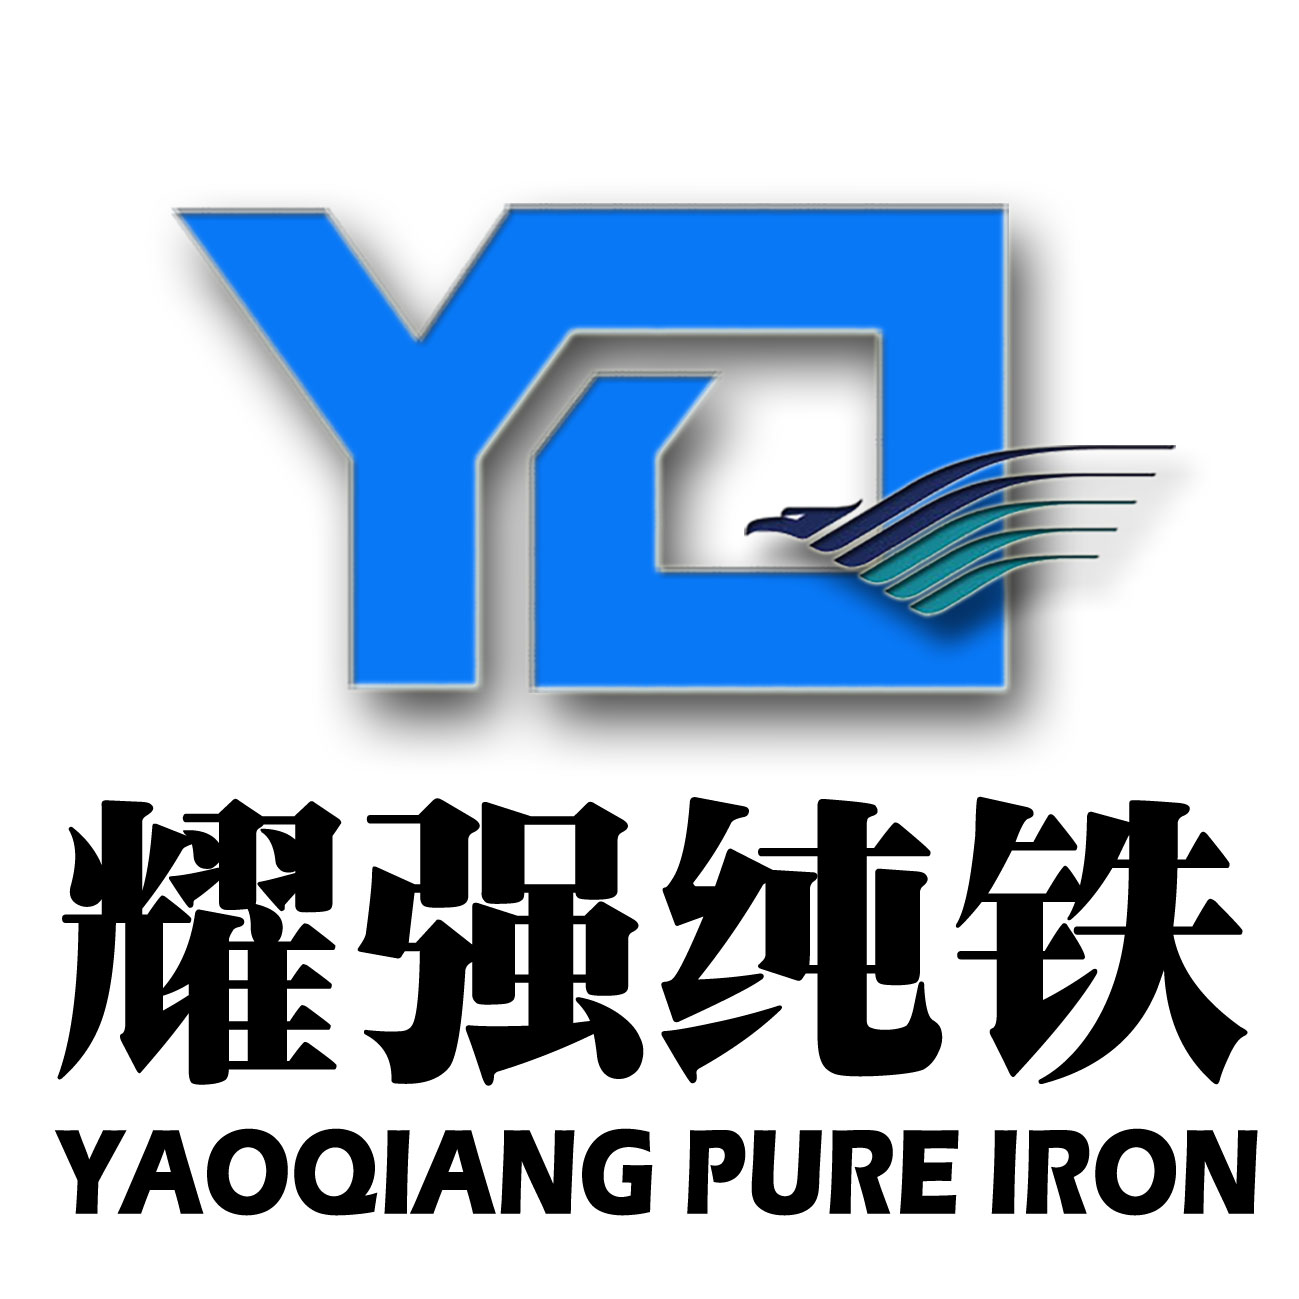 非晶纯铁YTnc1钕铁硼纯铁YTnd1